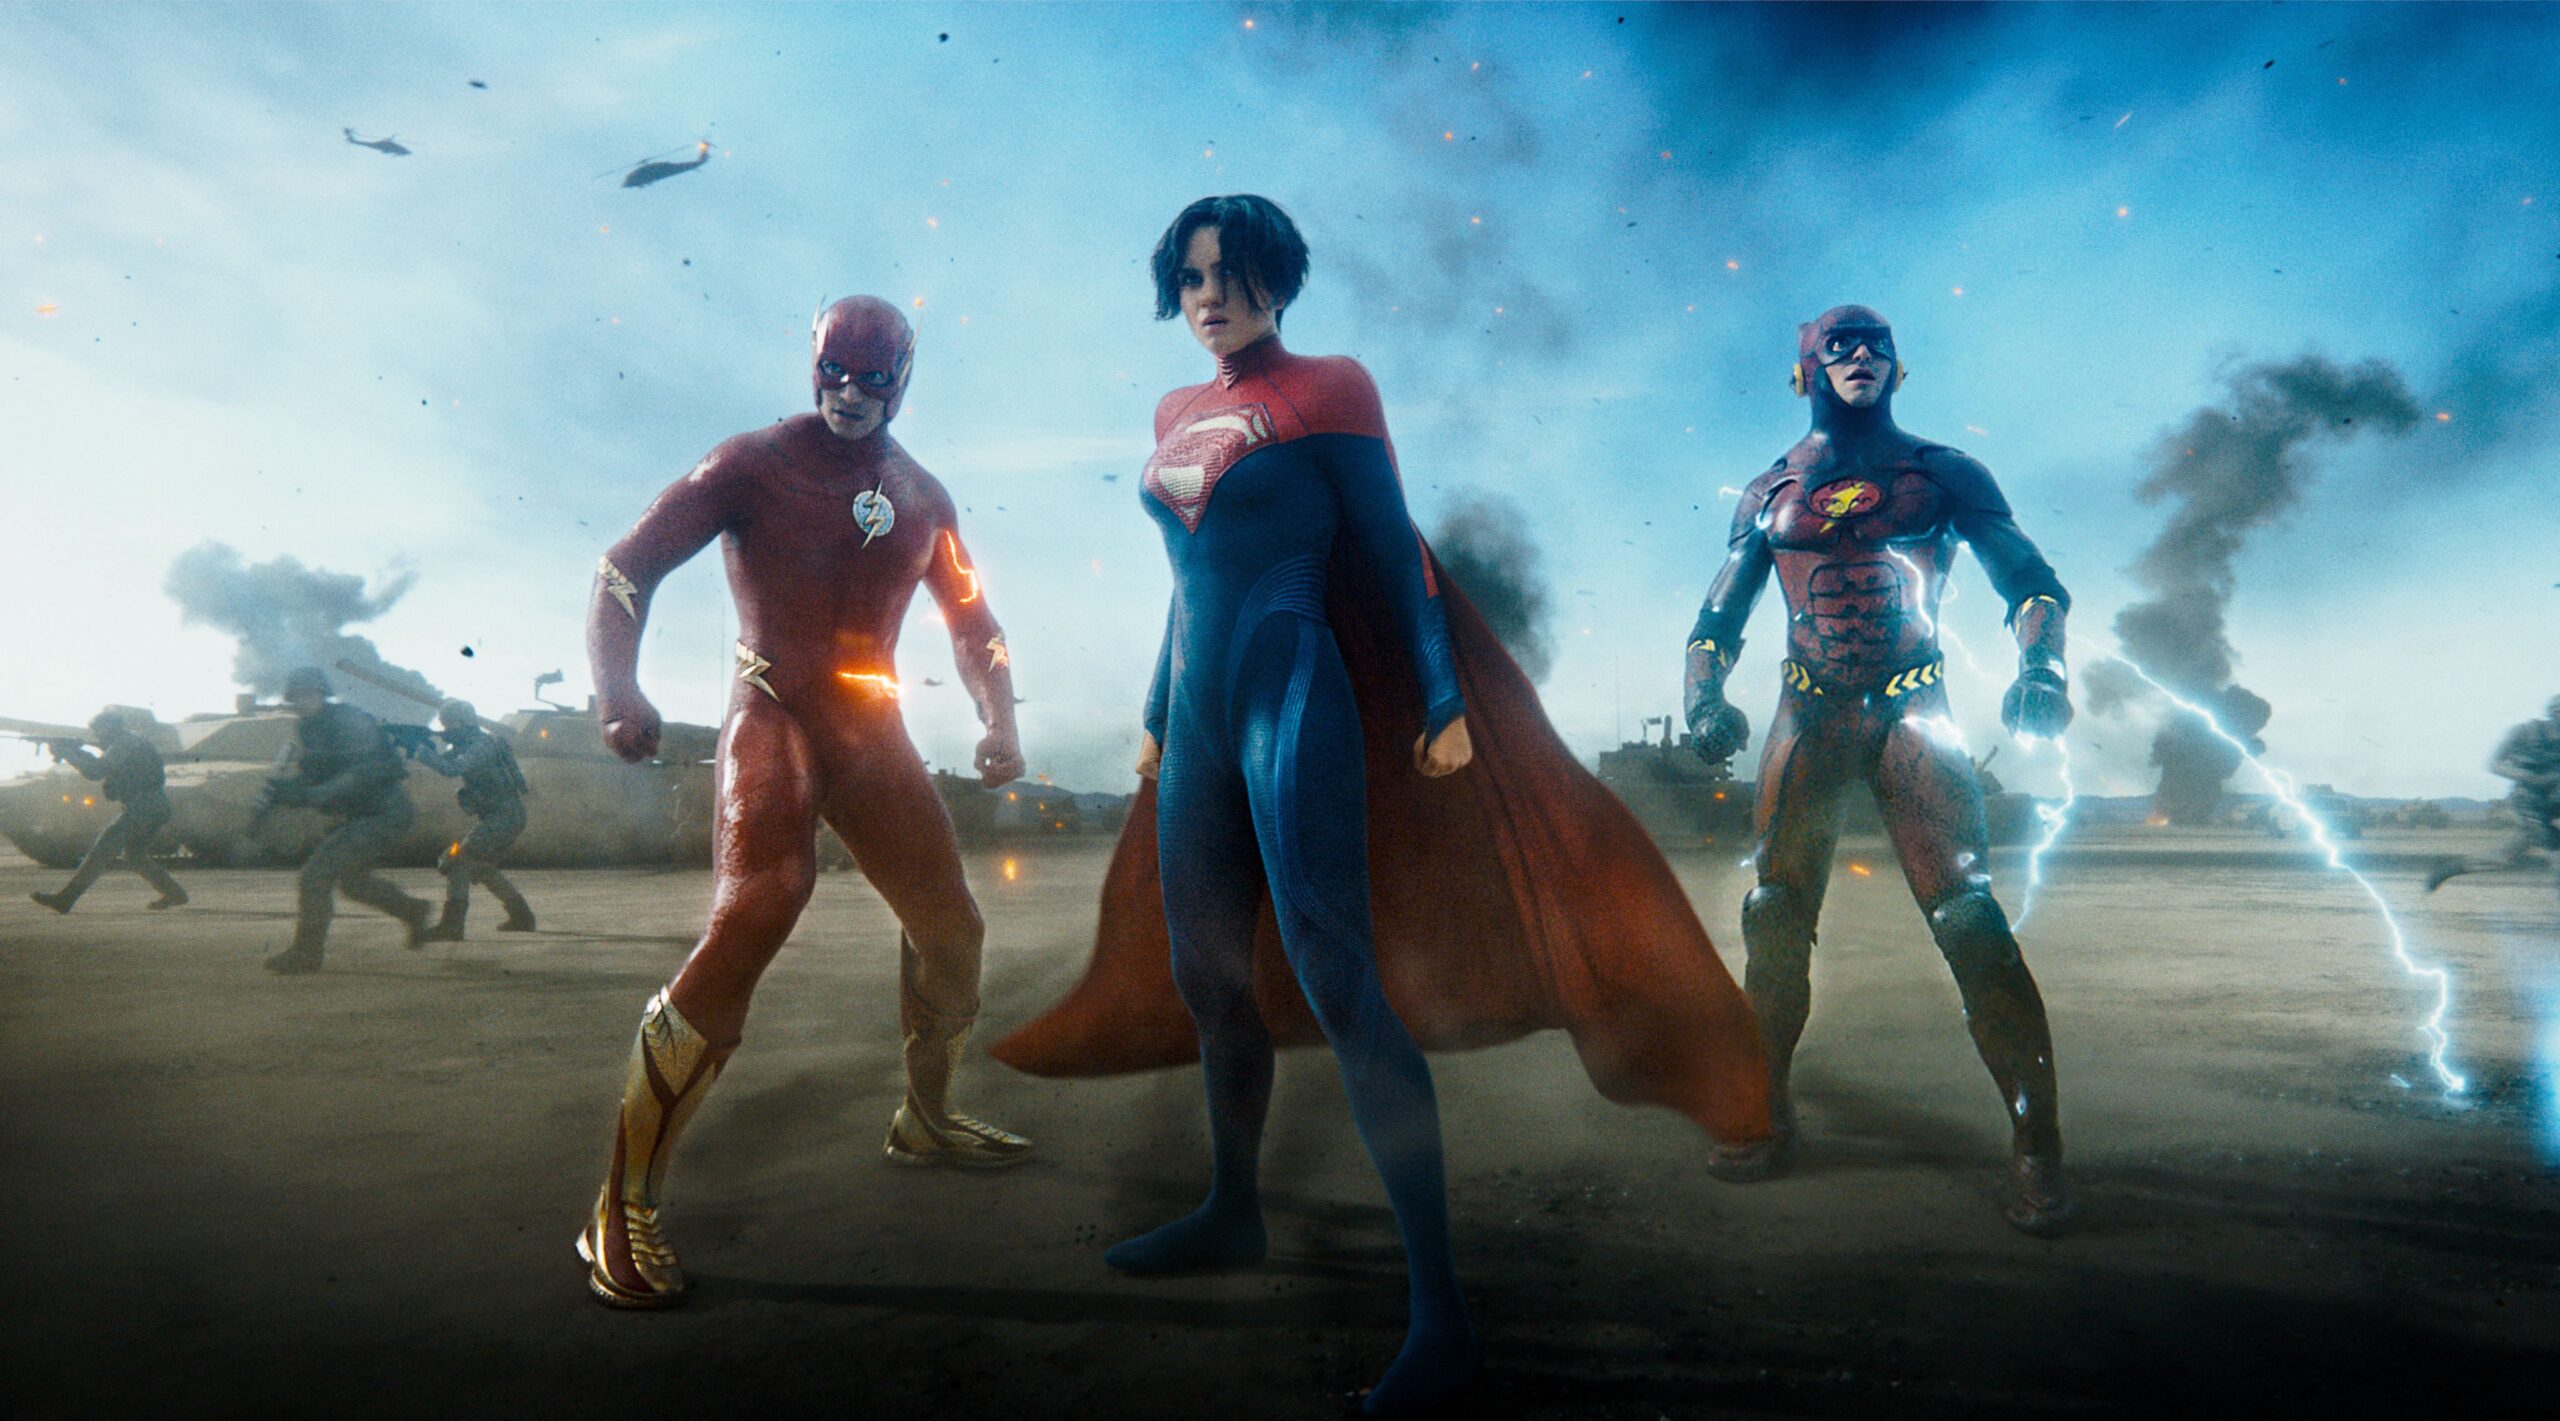 Ezra Miller as The Flash, Sasha Calle as Supergirl, and Ezra Miller as The Flash in The Flash